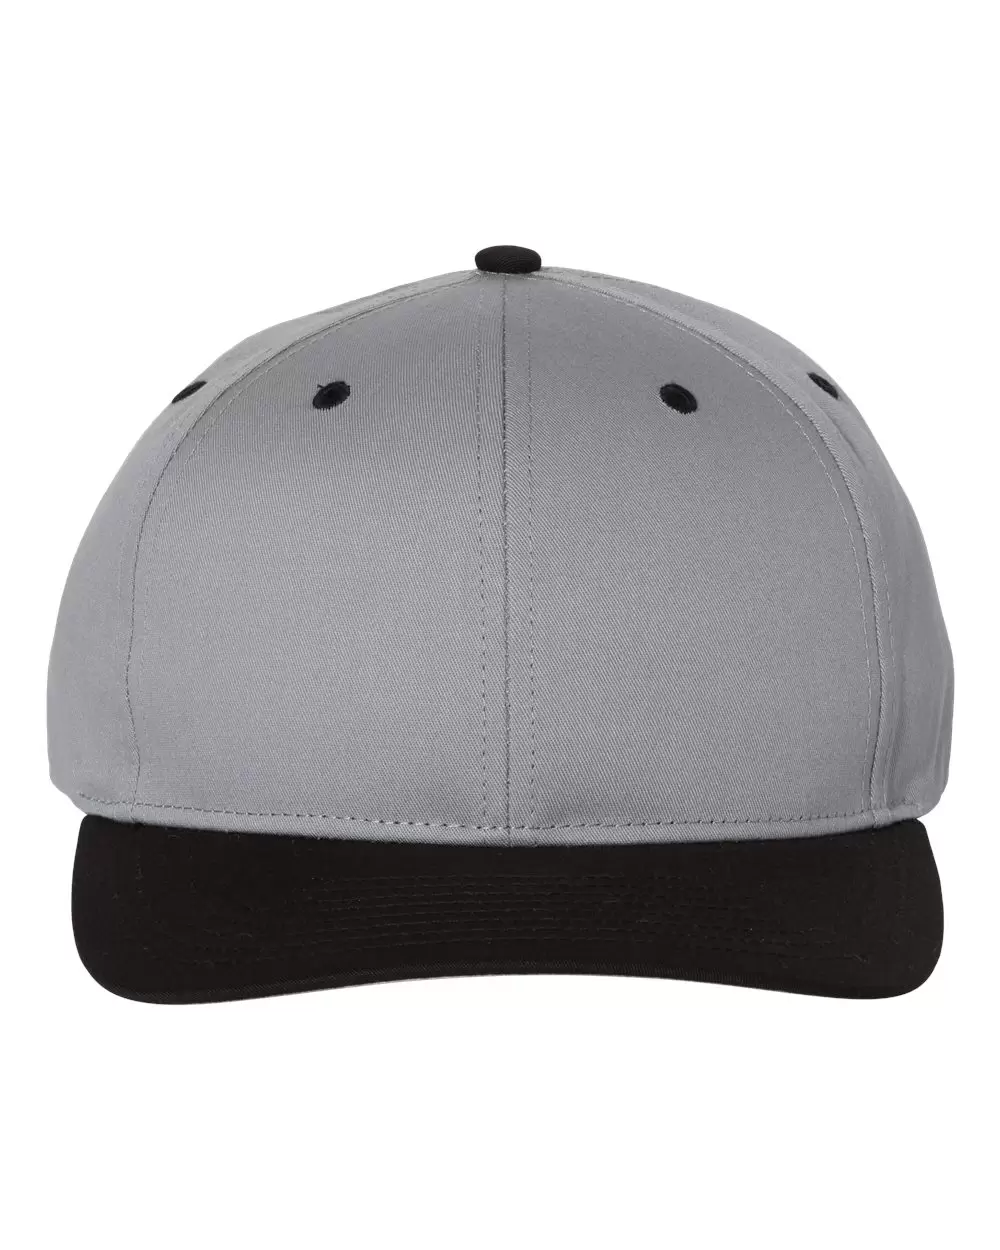 Richardson Hats Cap Twill From 212 Snapback - Pro